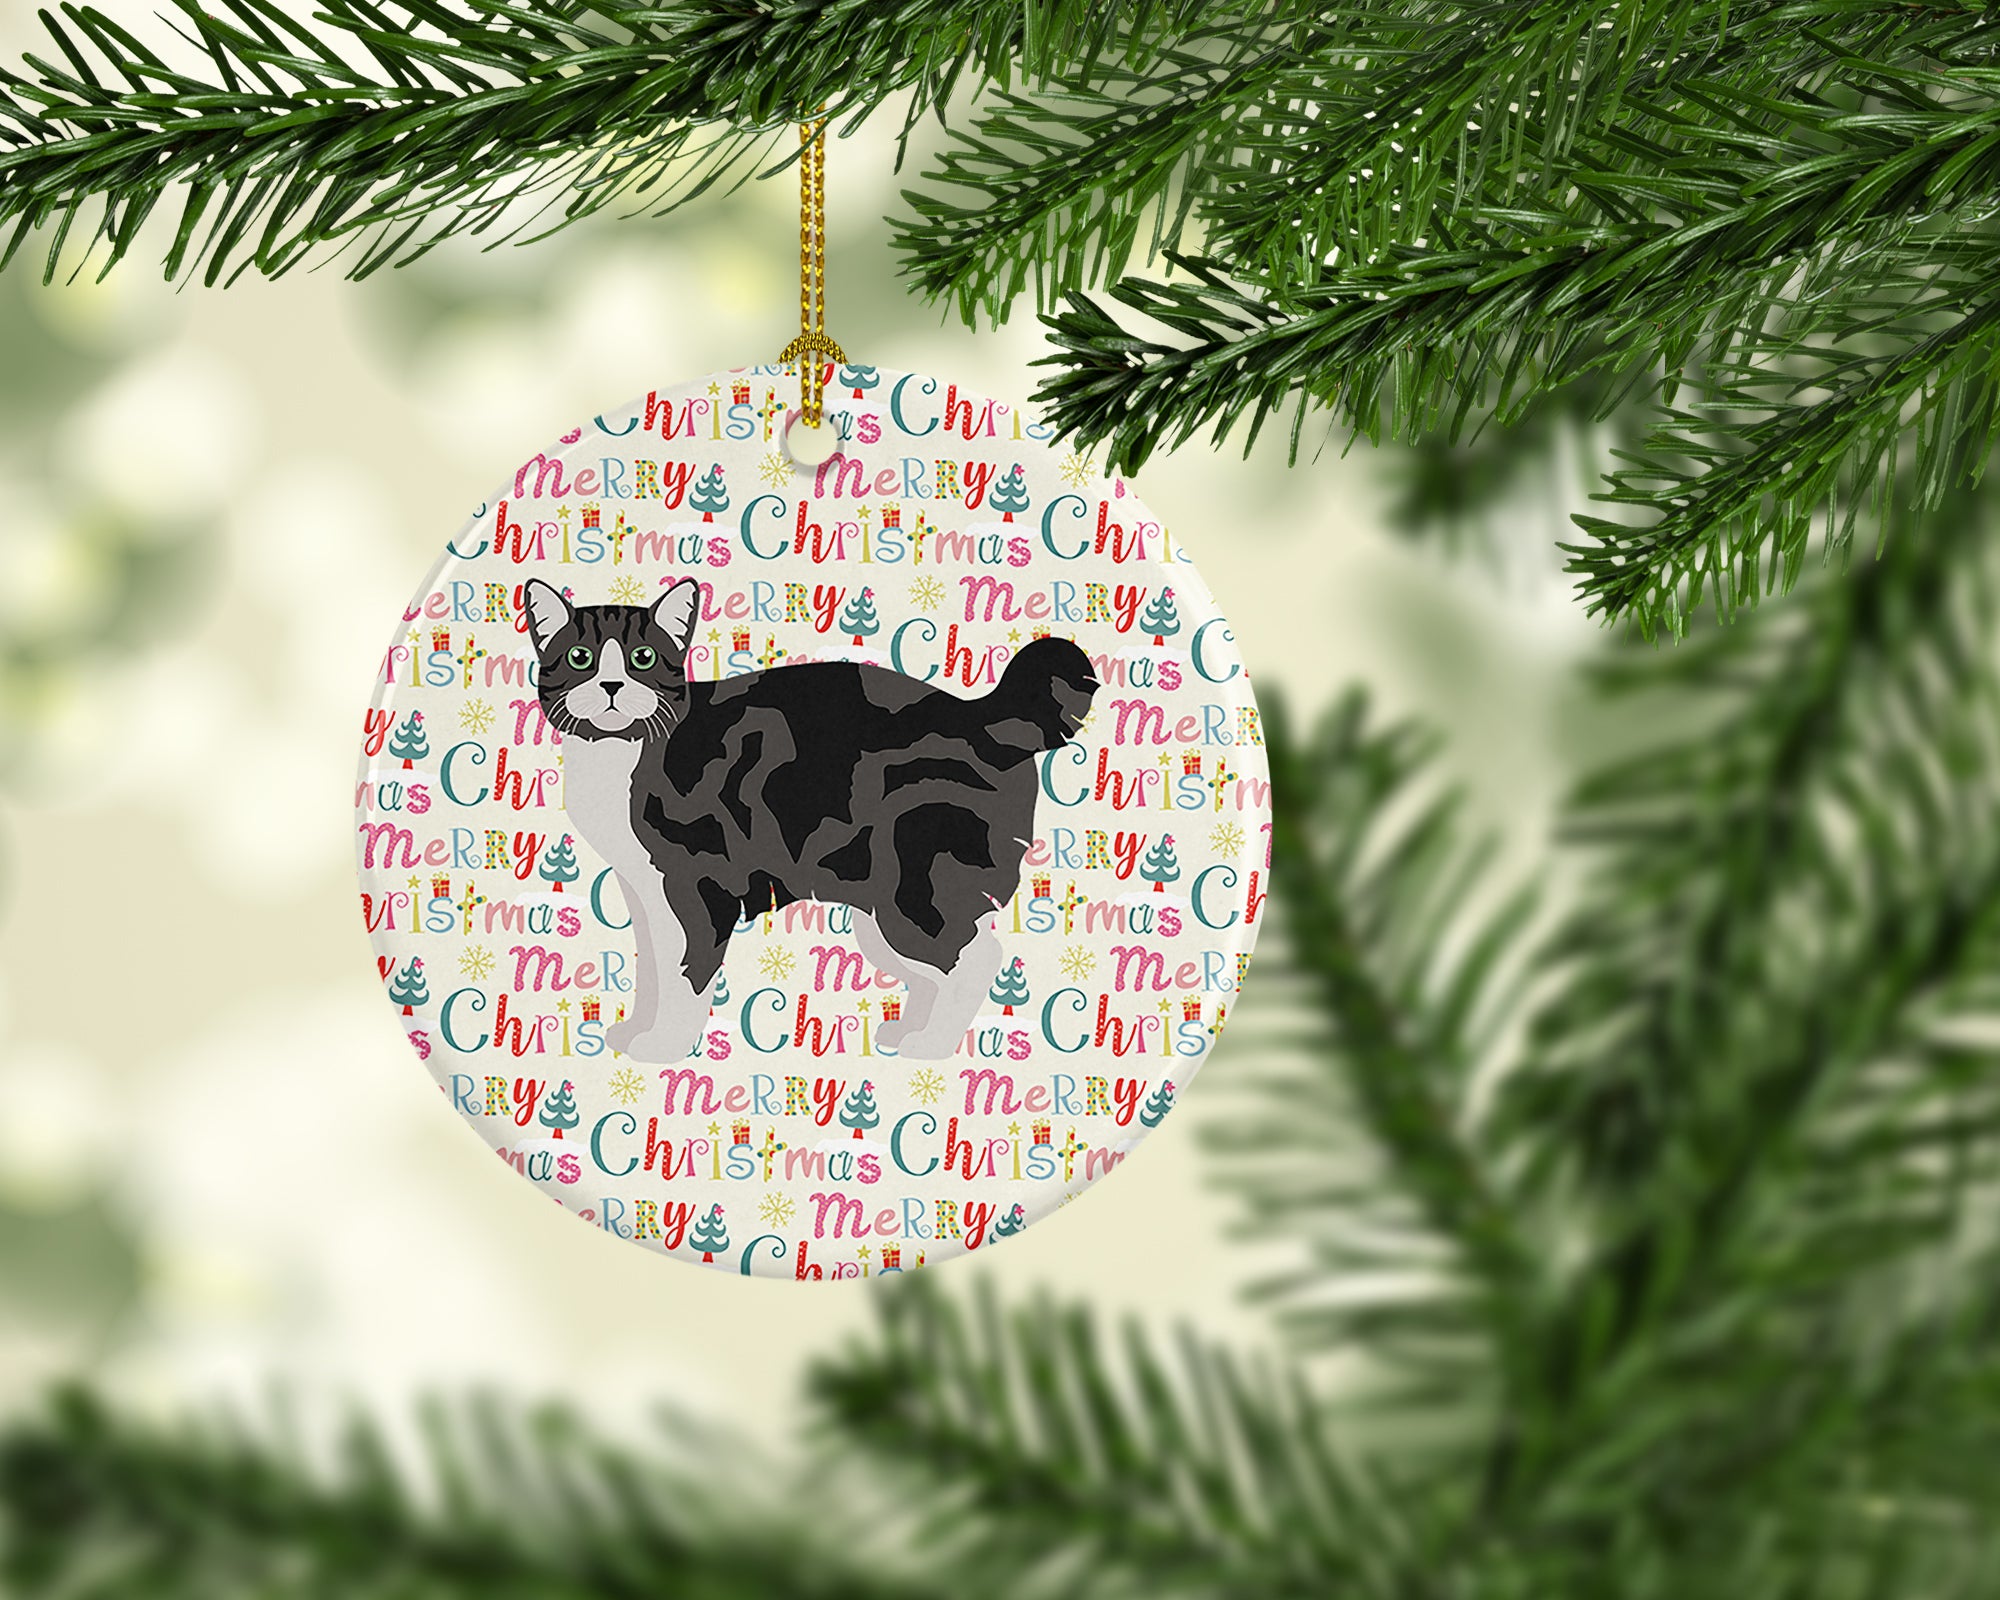 Buy this Manx #1 Cat Christmas Ceramic Ornament